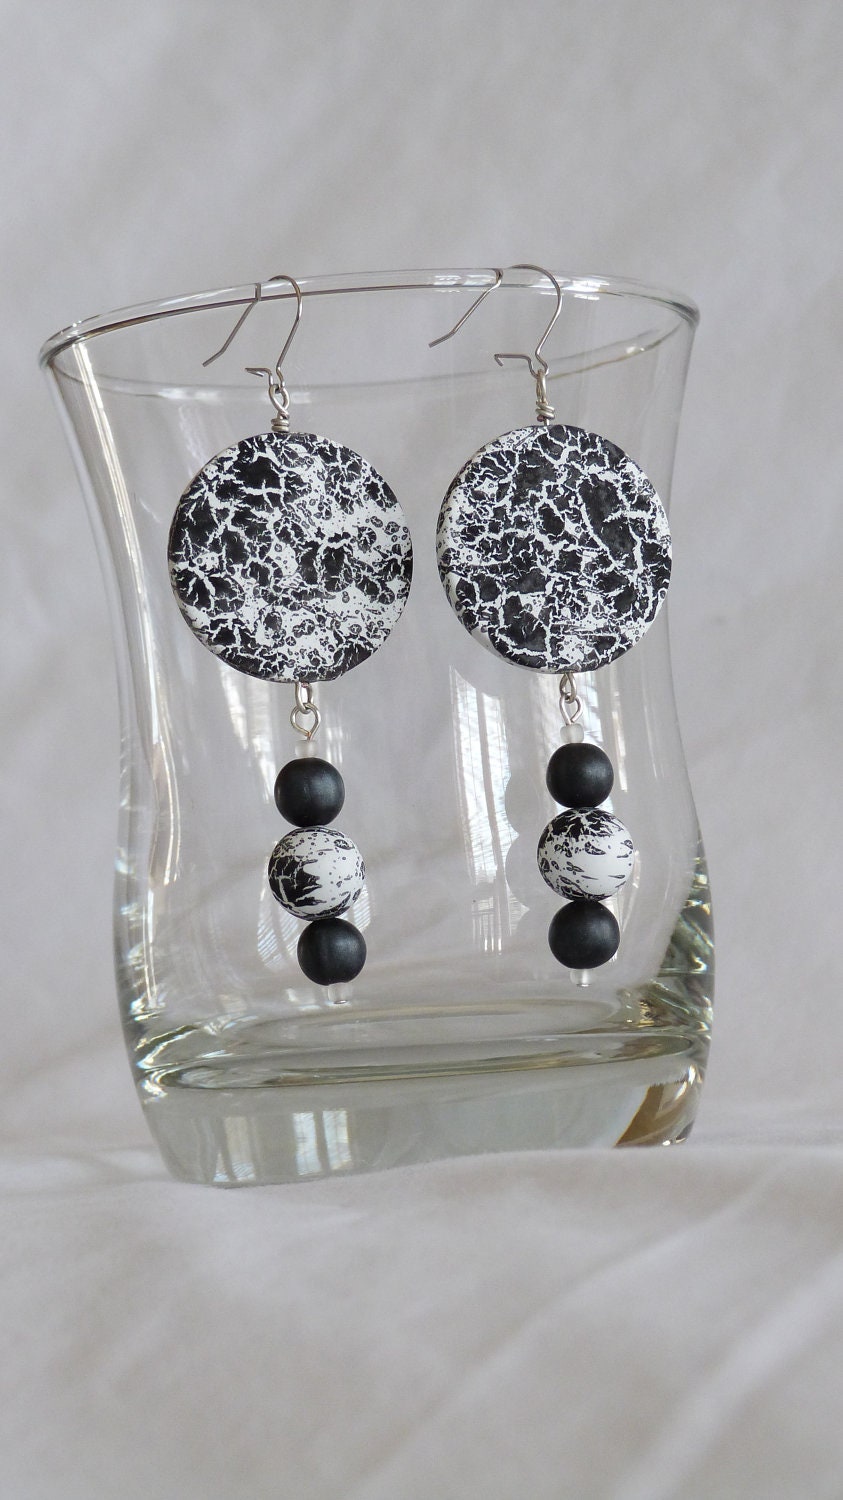 Black and White earrings